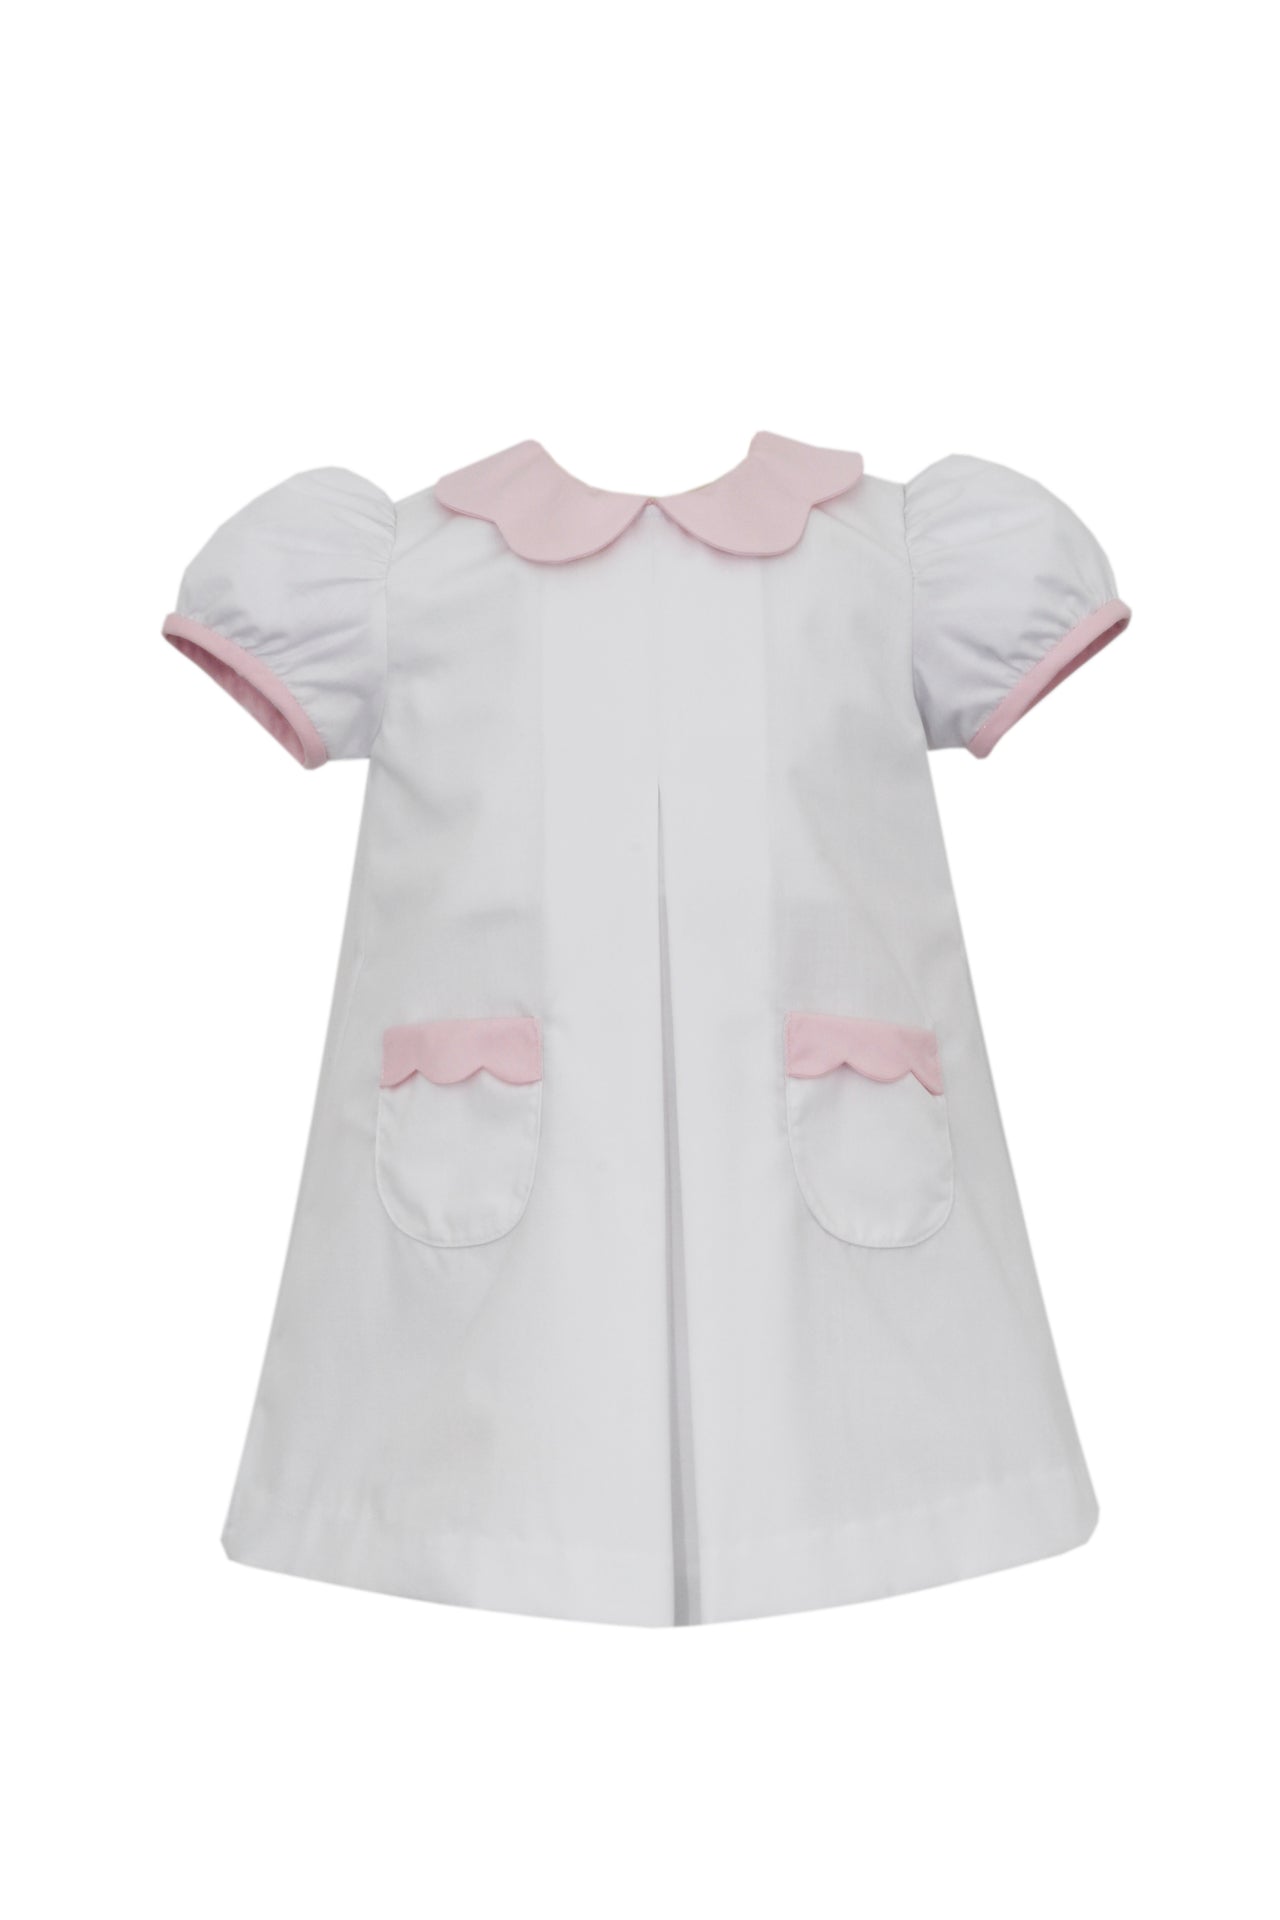 Petit Bebe Group 1 A-Line Dress W/Pink Scalloped Collar & Pockets White Poplin 110D-MS24 5012